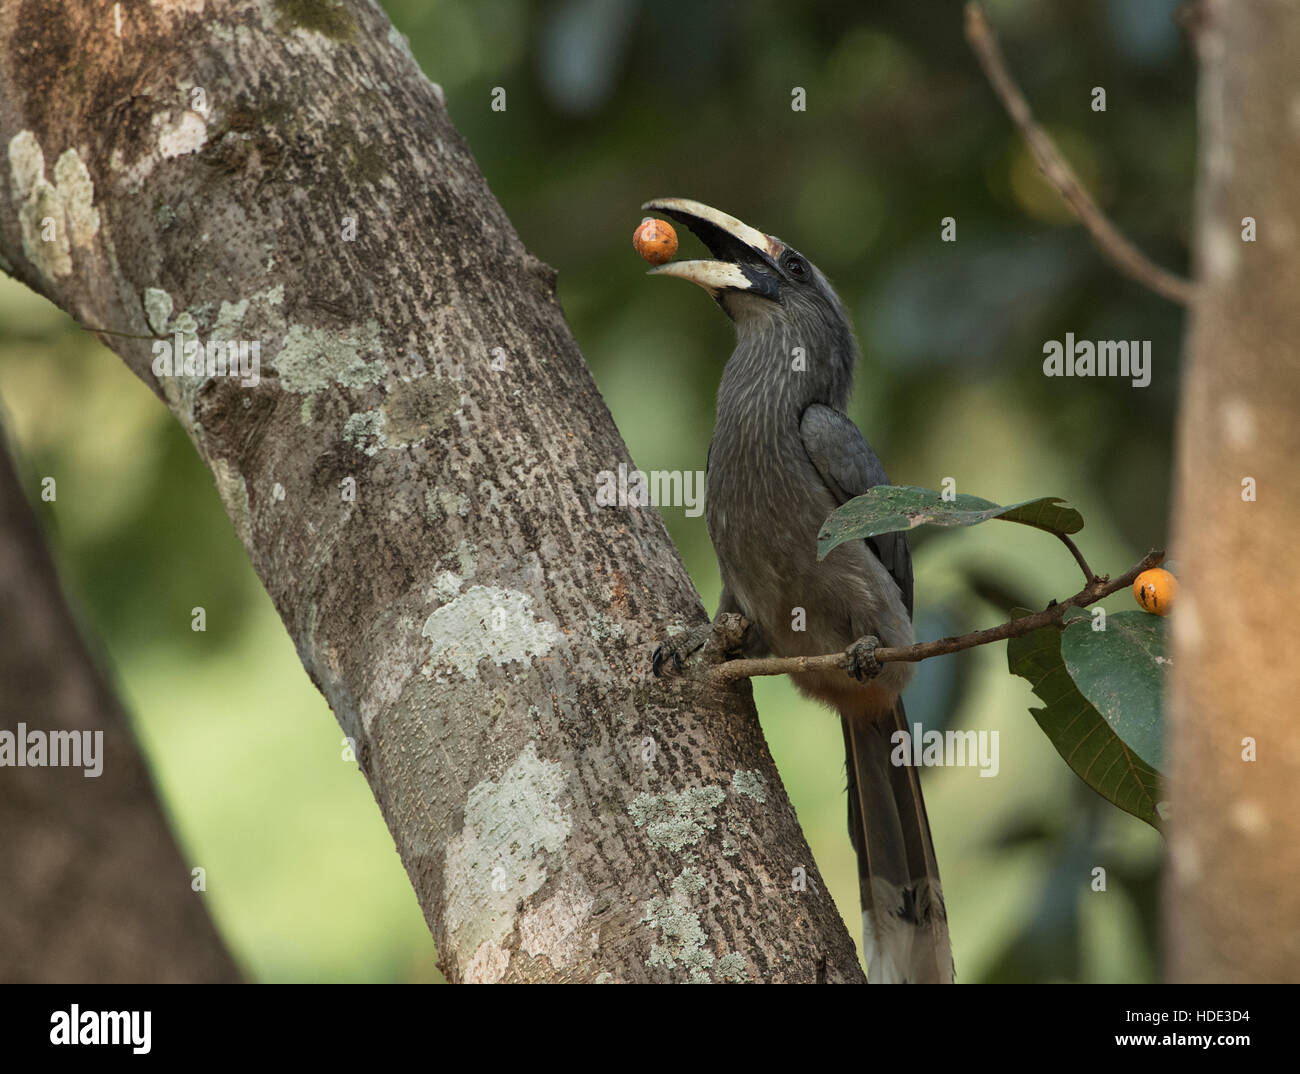 The image of Malabar Grey Hornbill (  Ocyceros griseus) was taken in Dandeli wildlife sanctuary, Karnatka, India Stock Photo